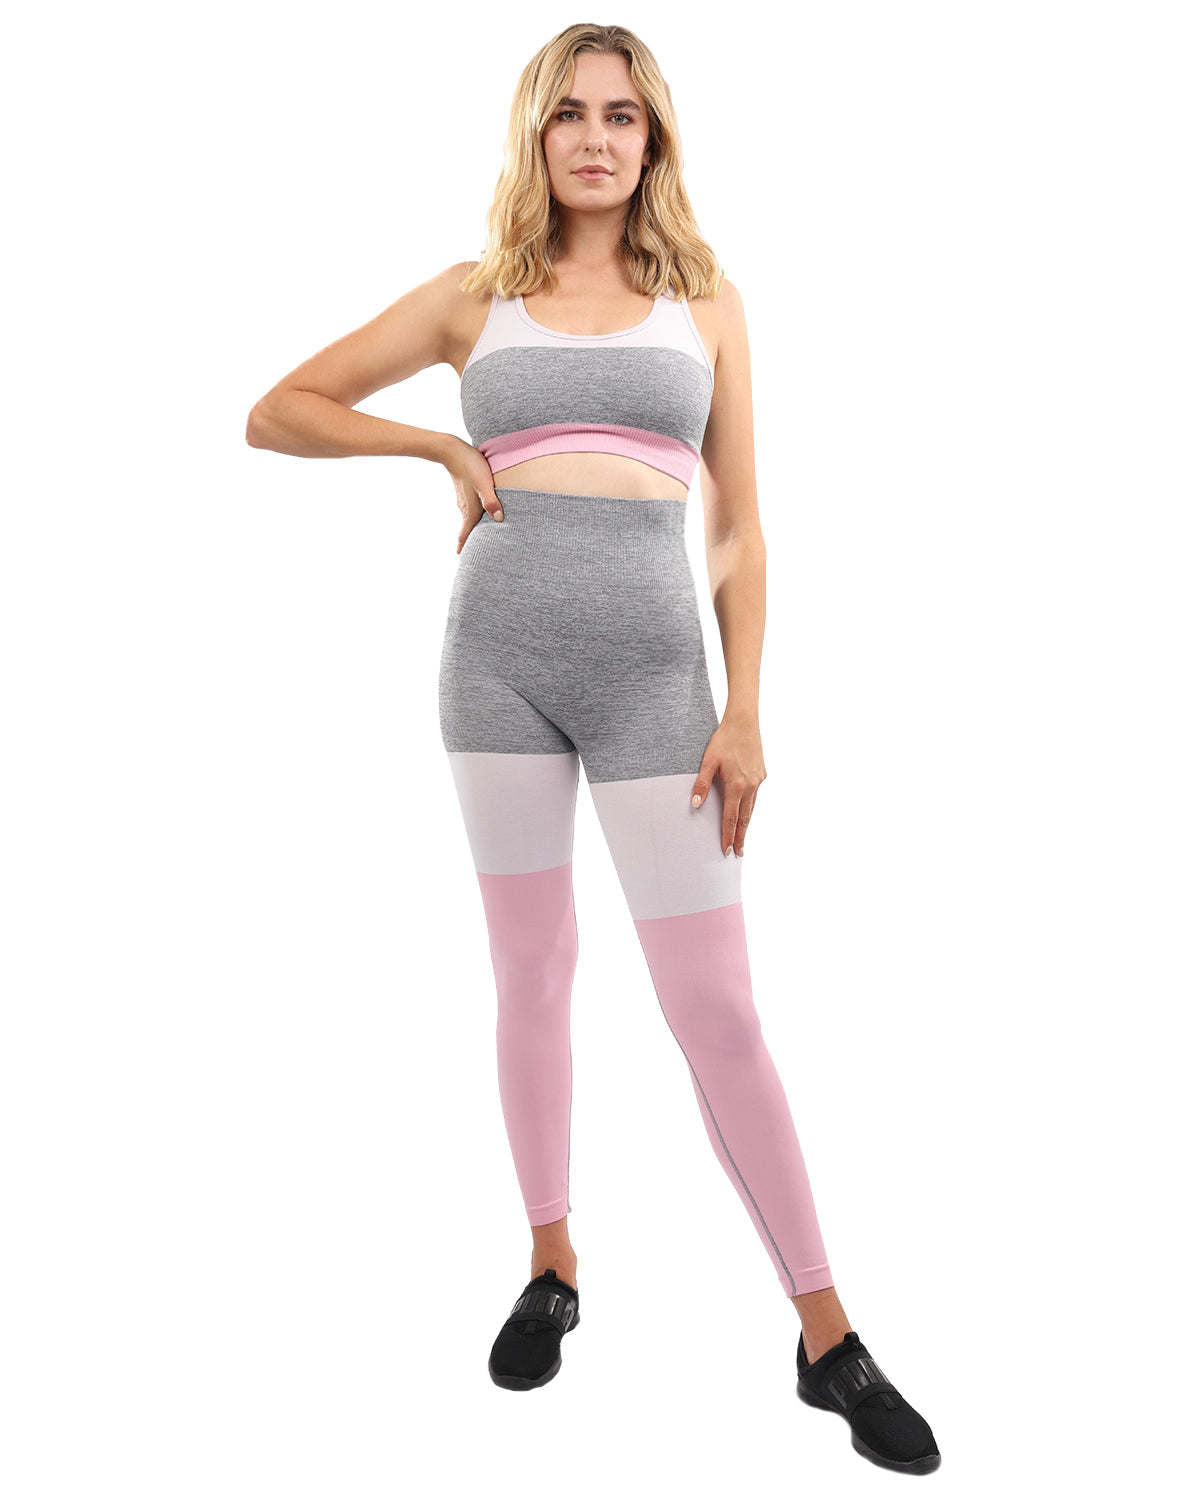 Graca Seamless Leggings & Sports Bra Set - Grey with Pink & White - Tonkn